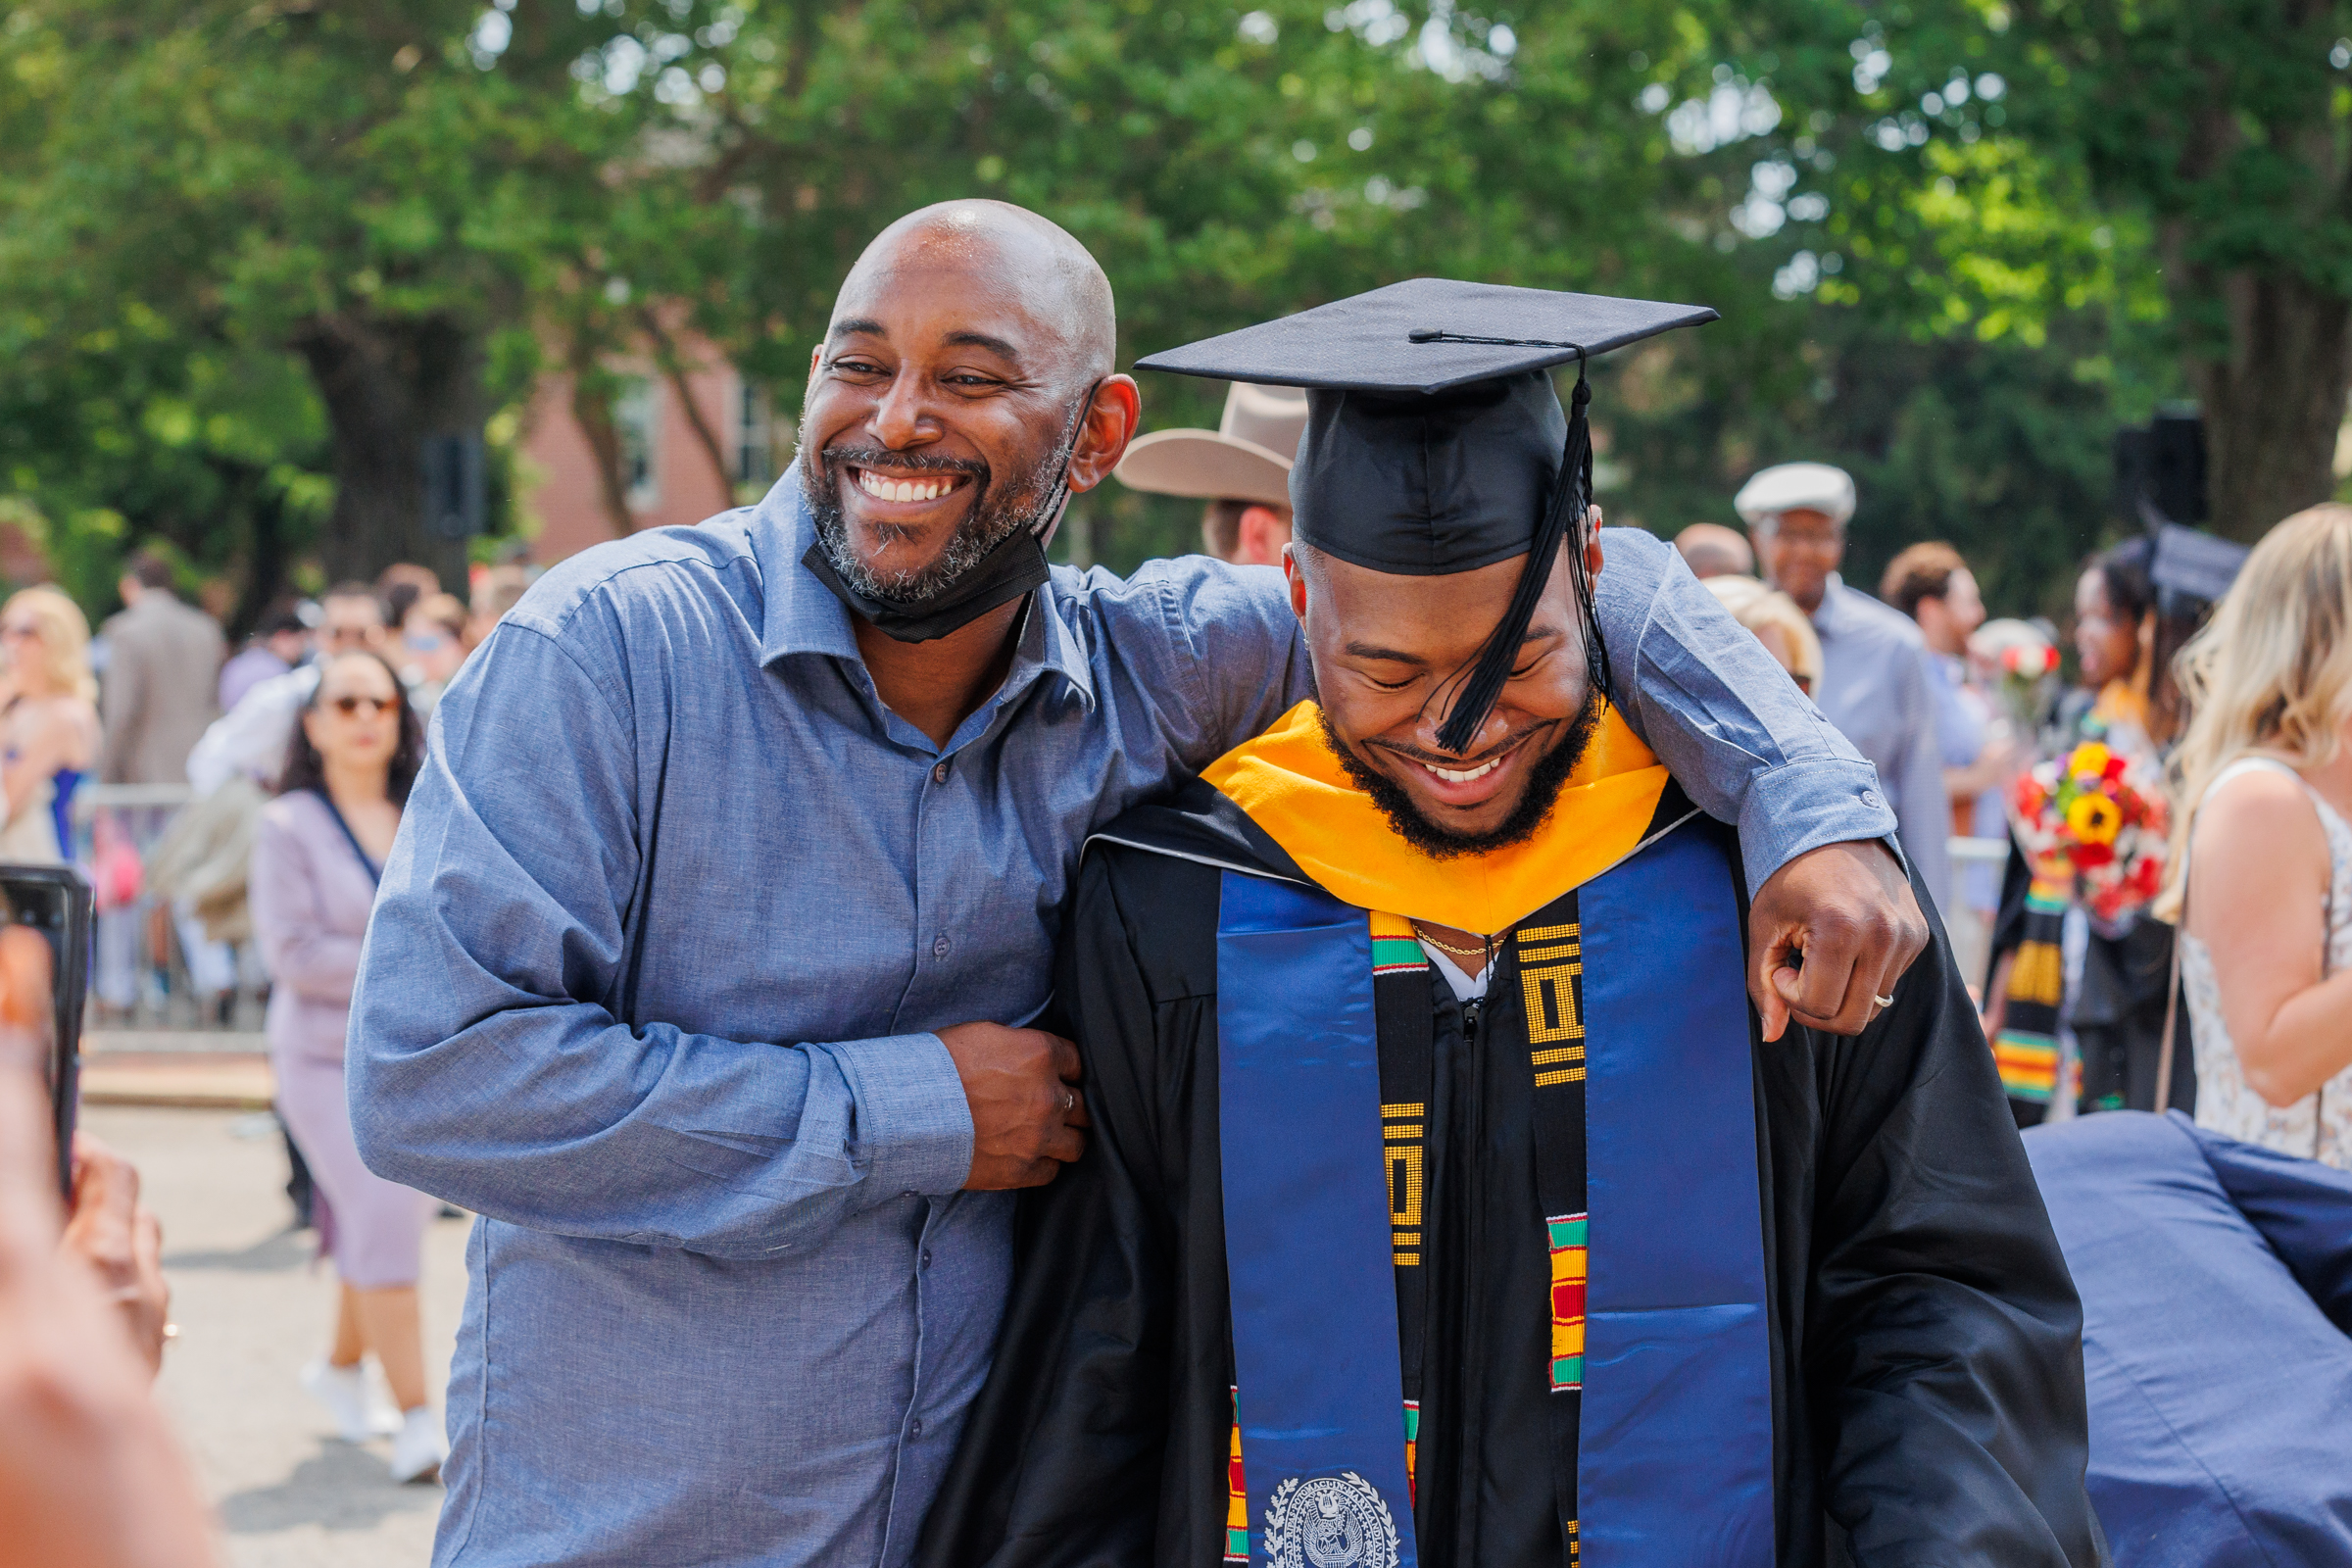 A man puts his arm around a graduate